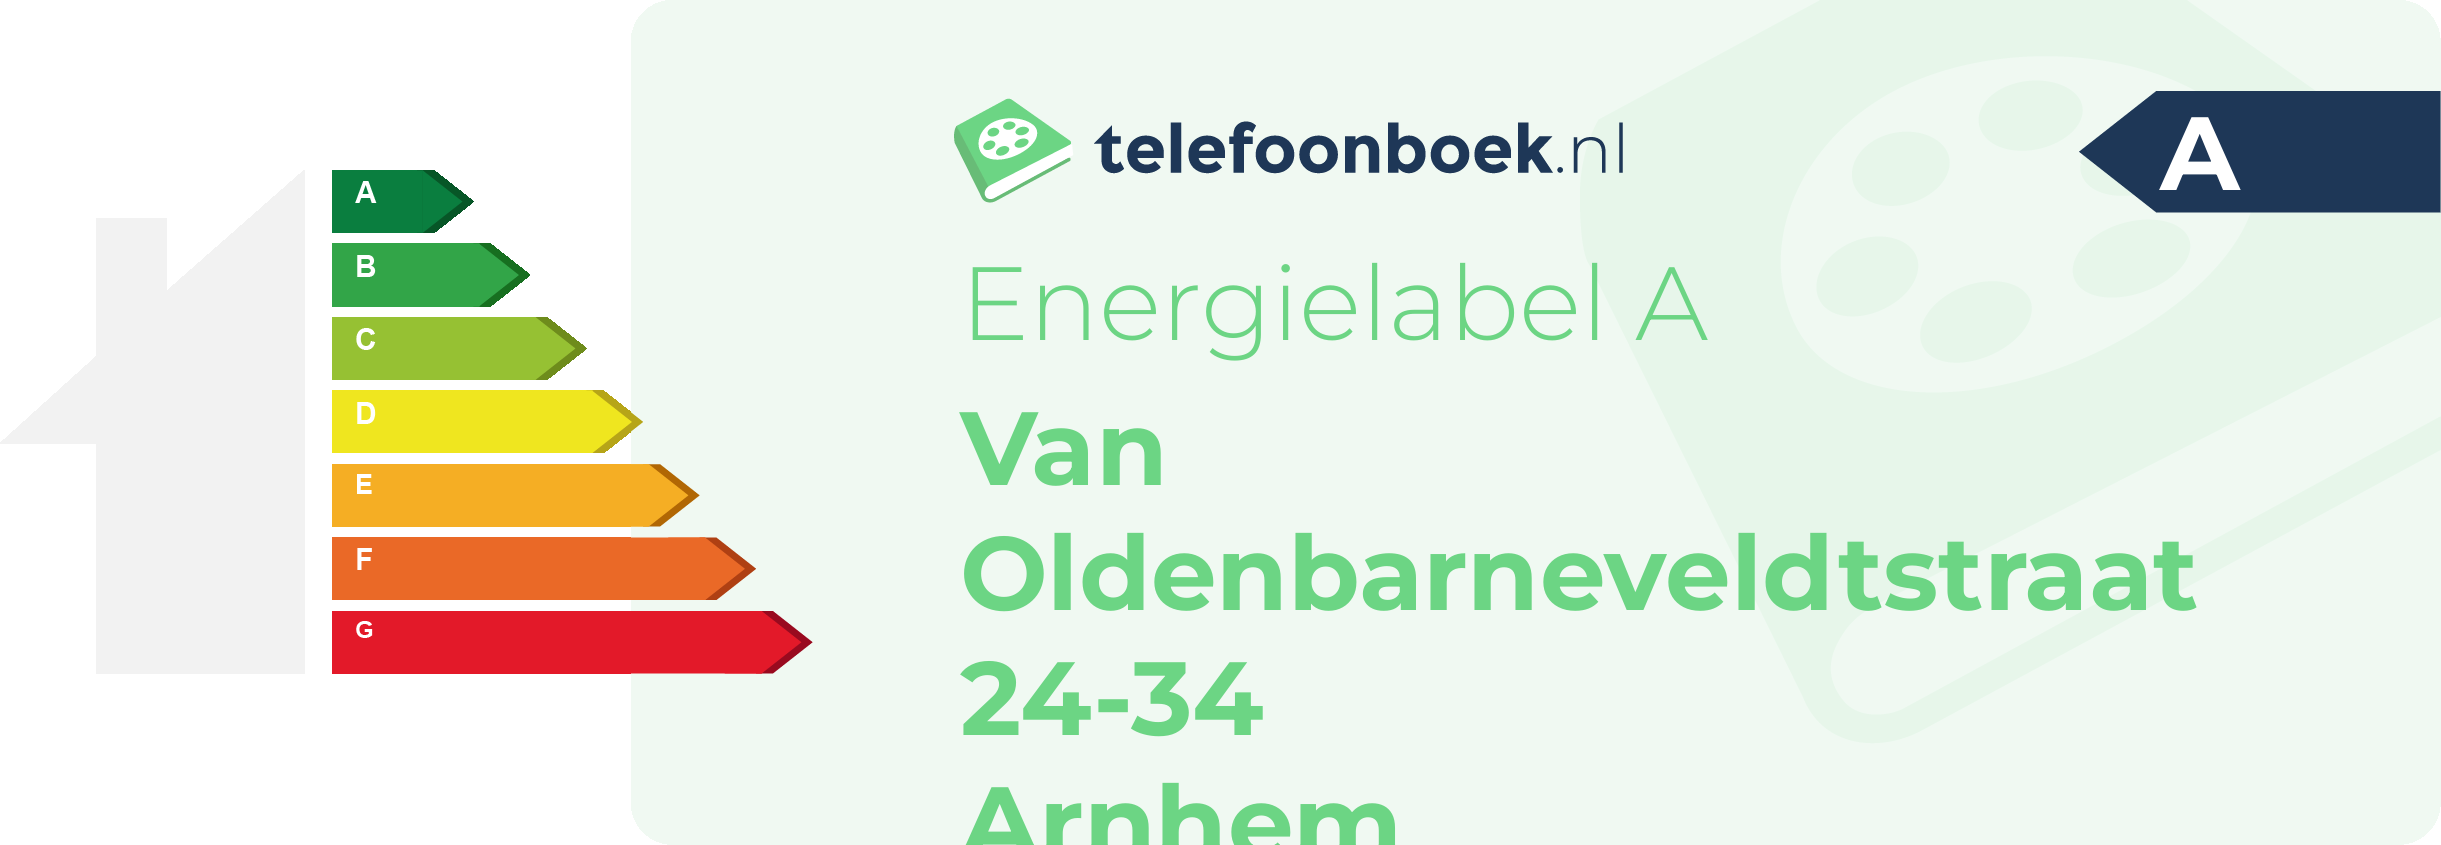 Energielabel Van Oldenbarneveldtstraat 24-34 Arnhem